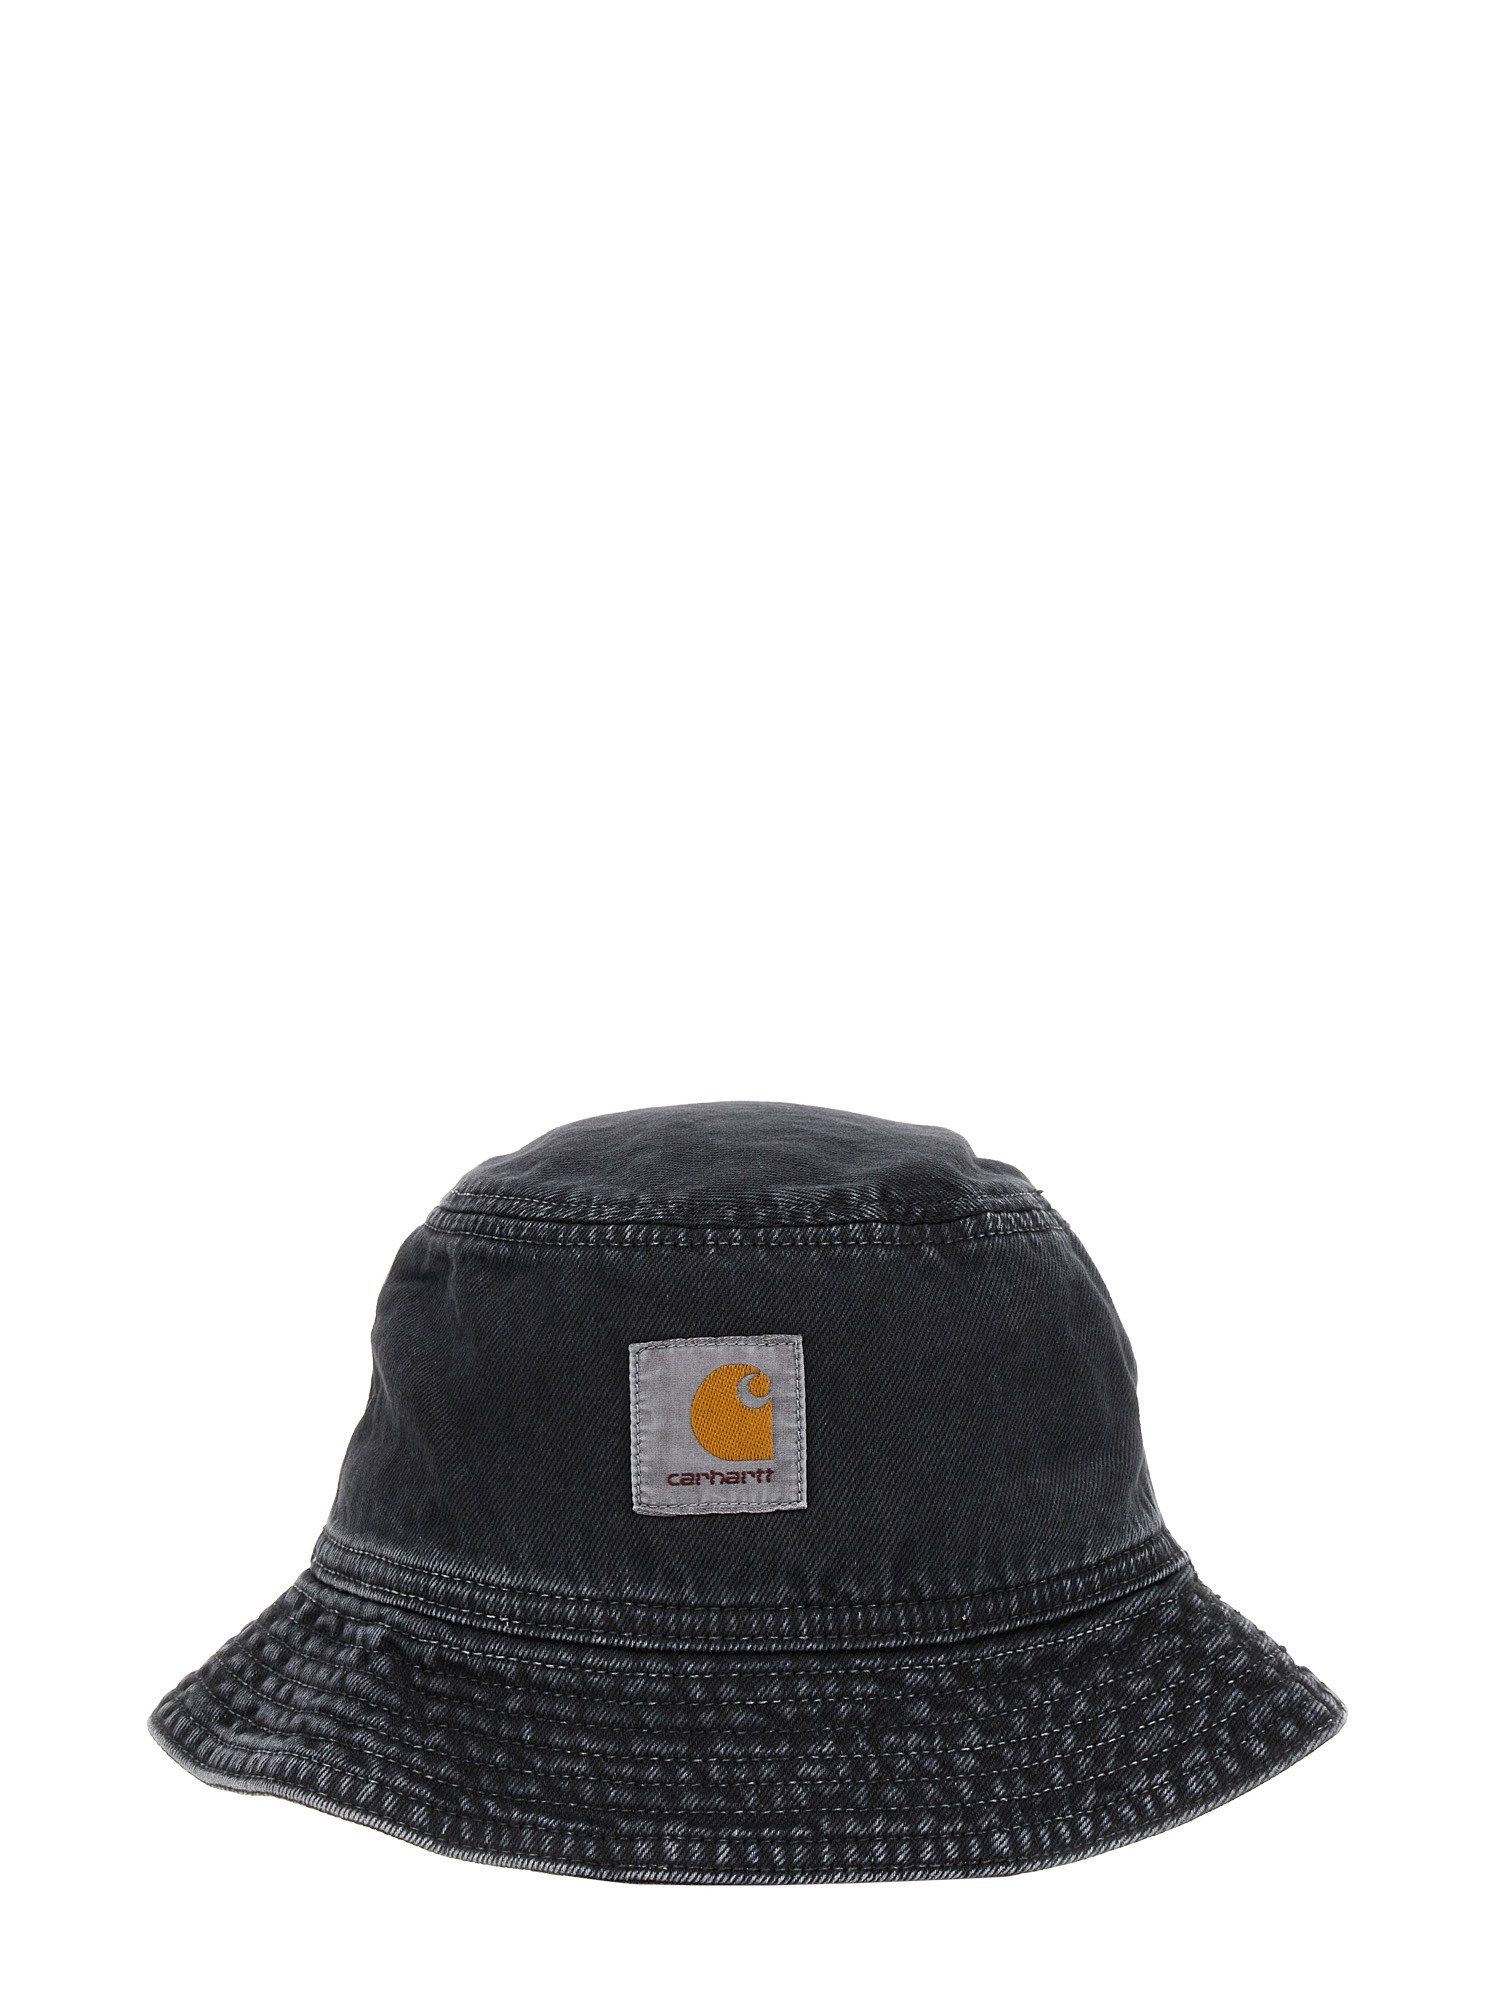 Carhartt WIP carhartt wip bucket hat "garrison"